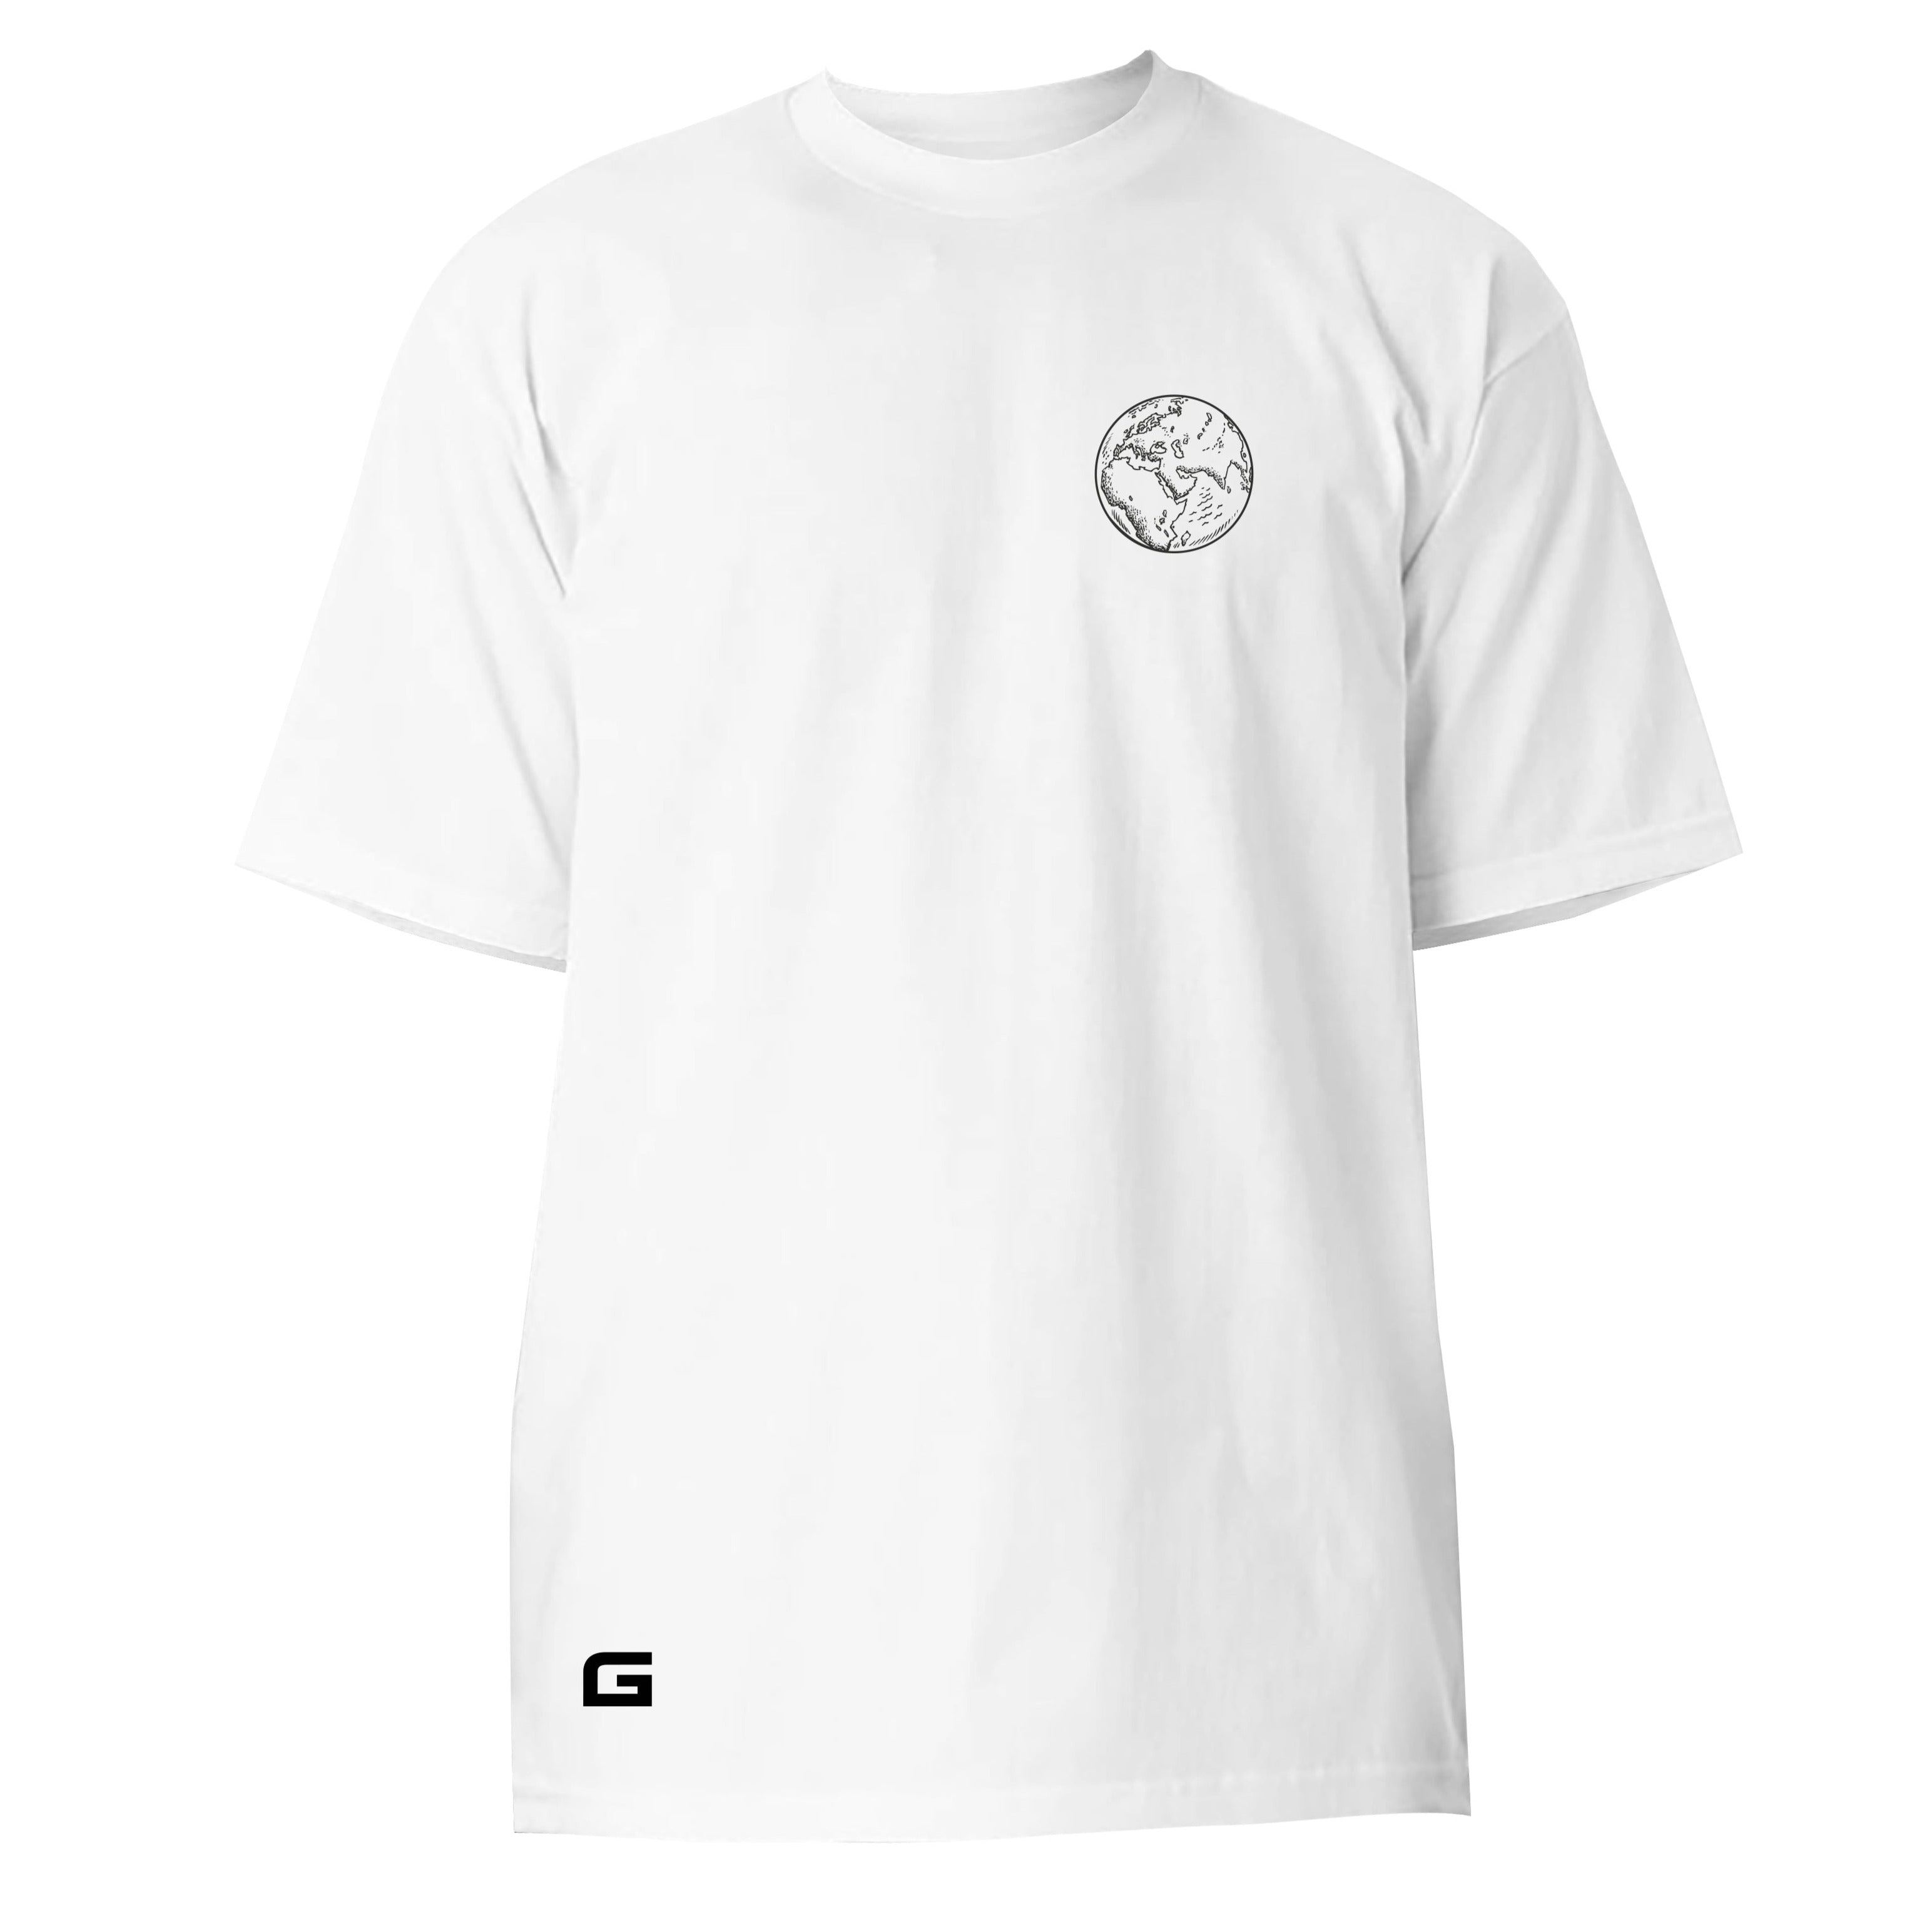 The Globe T-Shirt